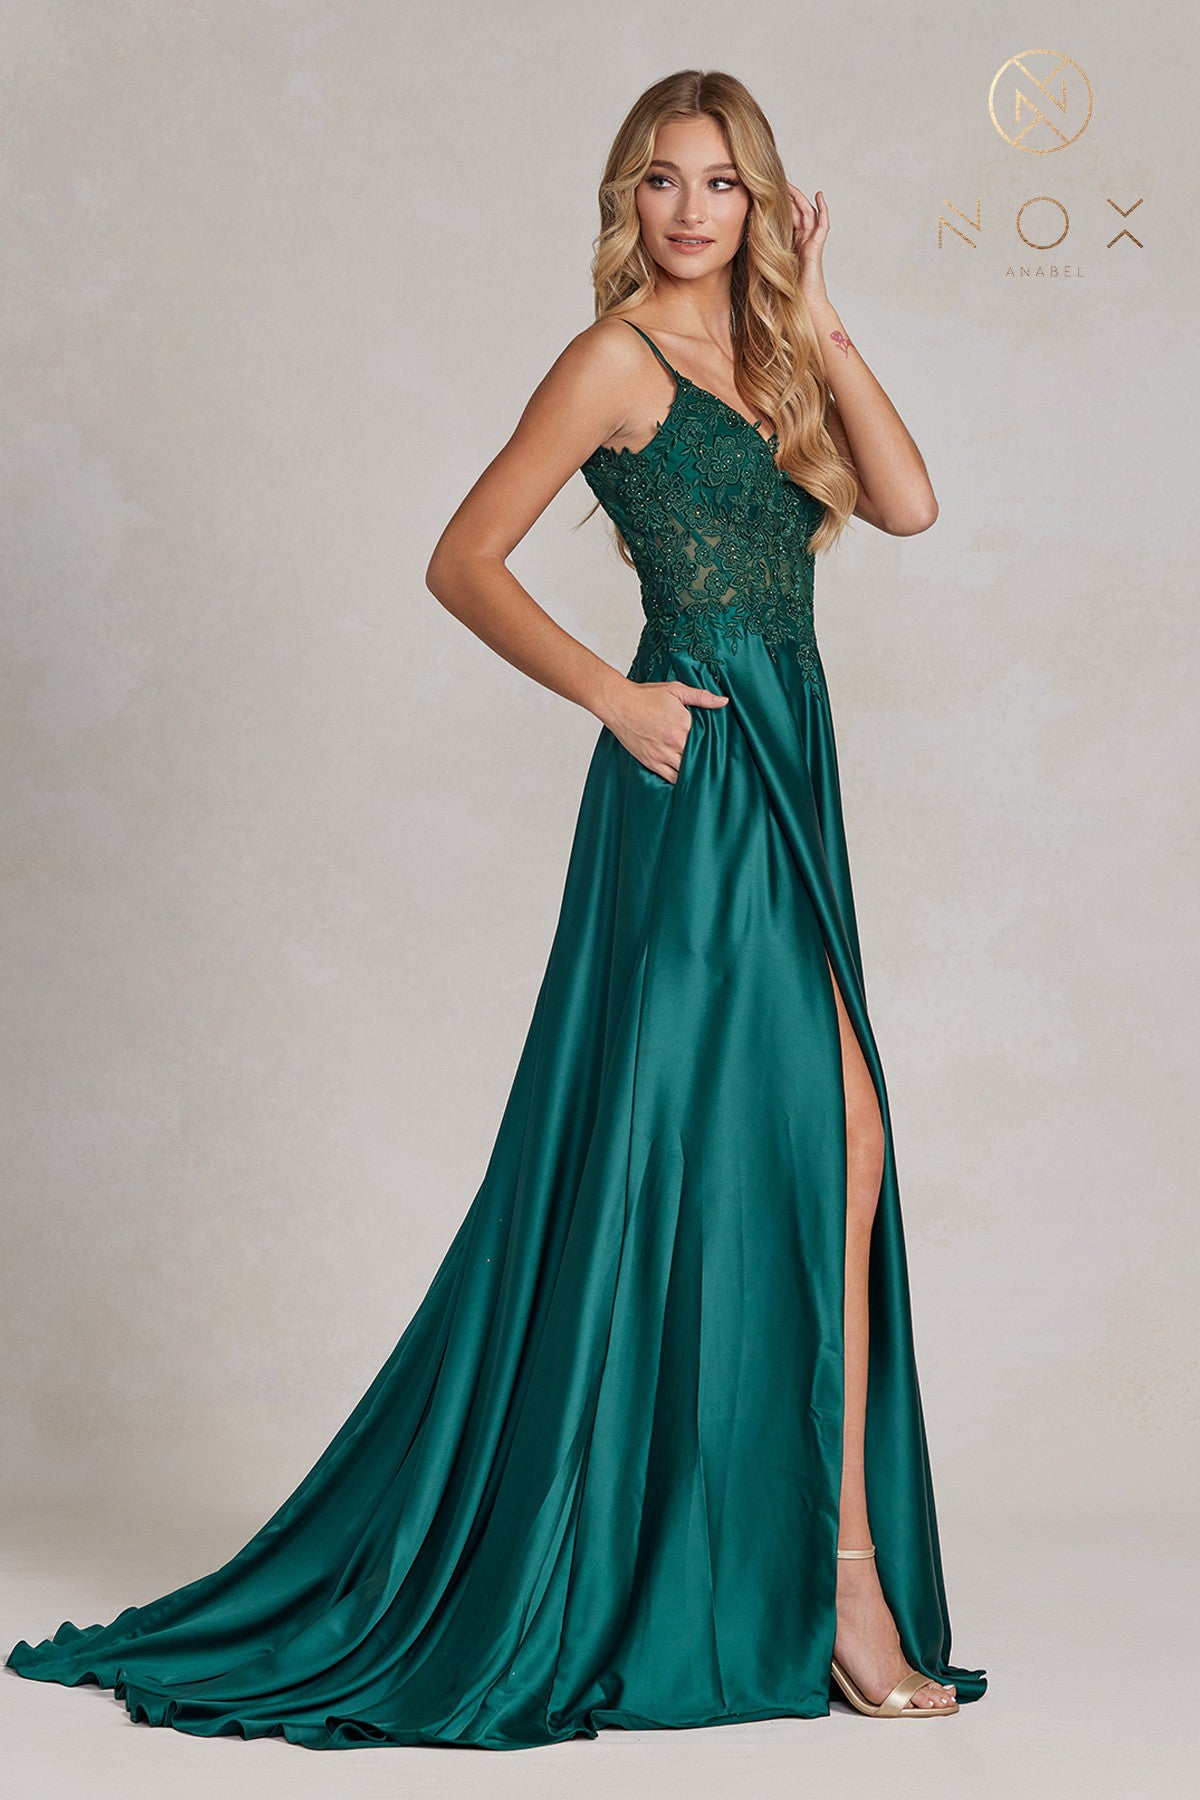 Lace Applique Bodice A-Line Dress By Nox Anabel -K1121